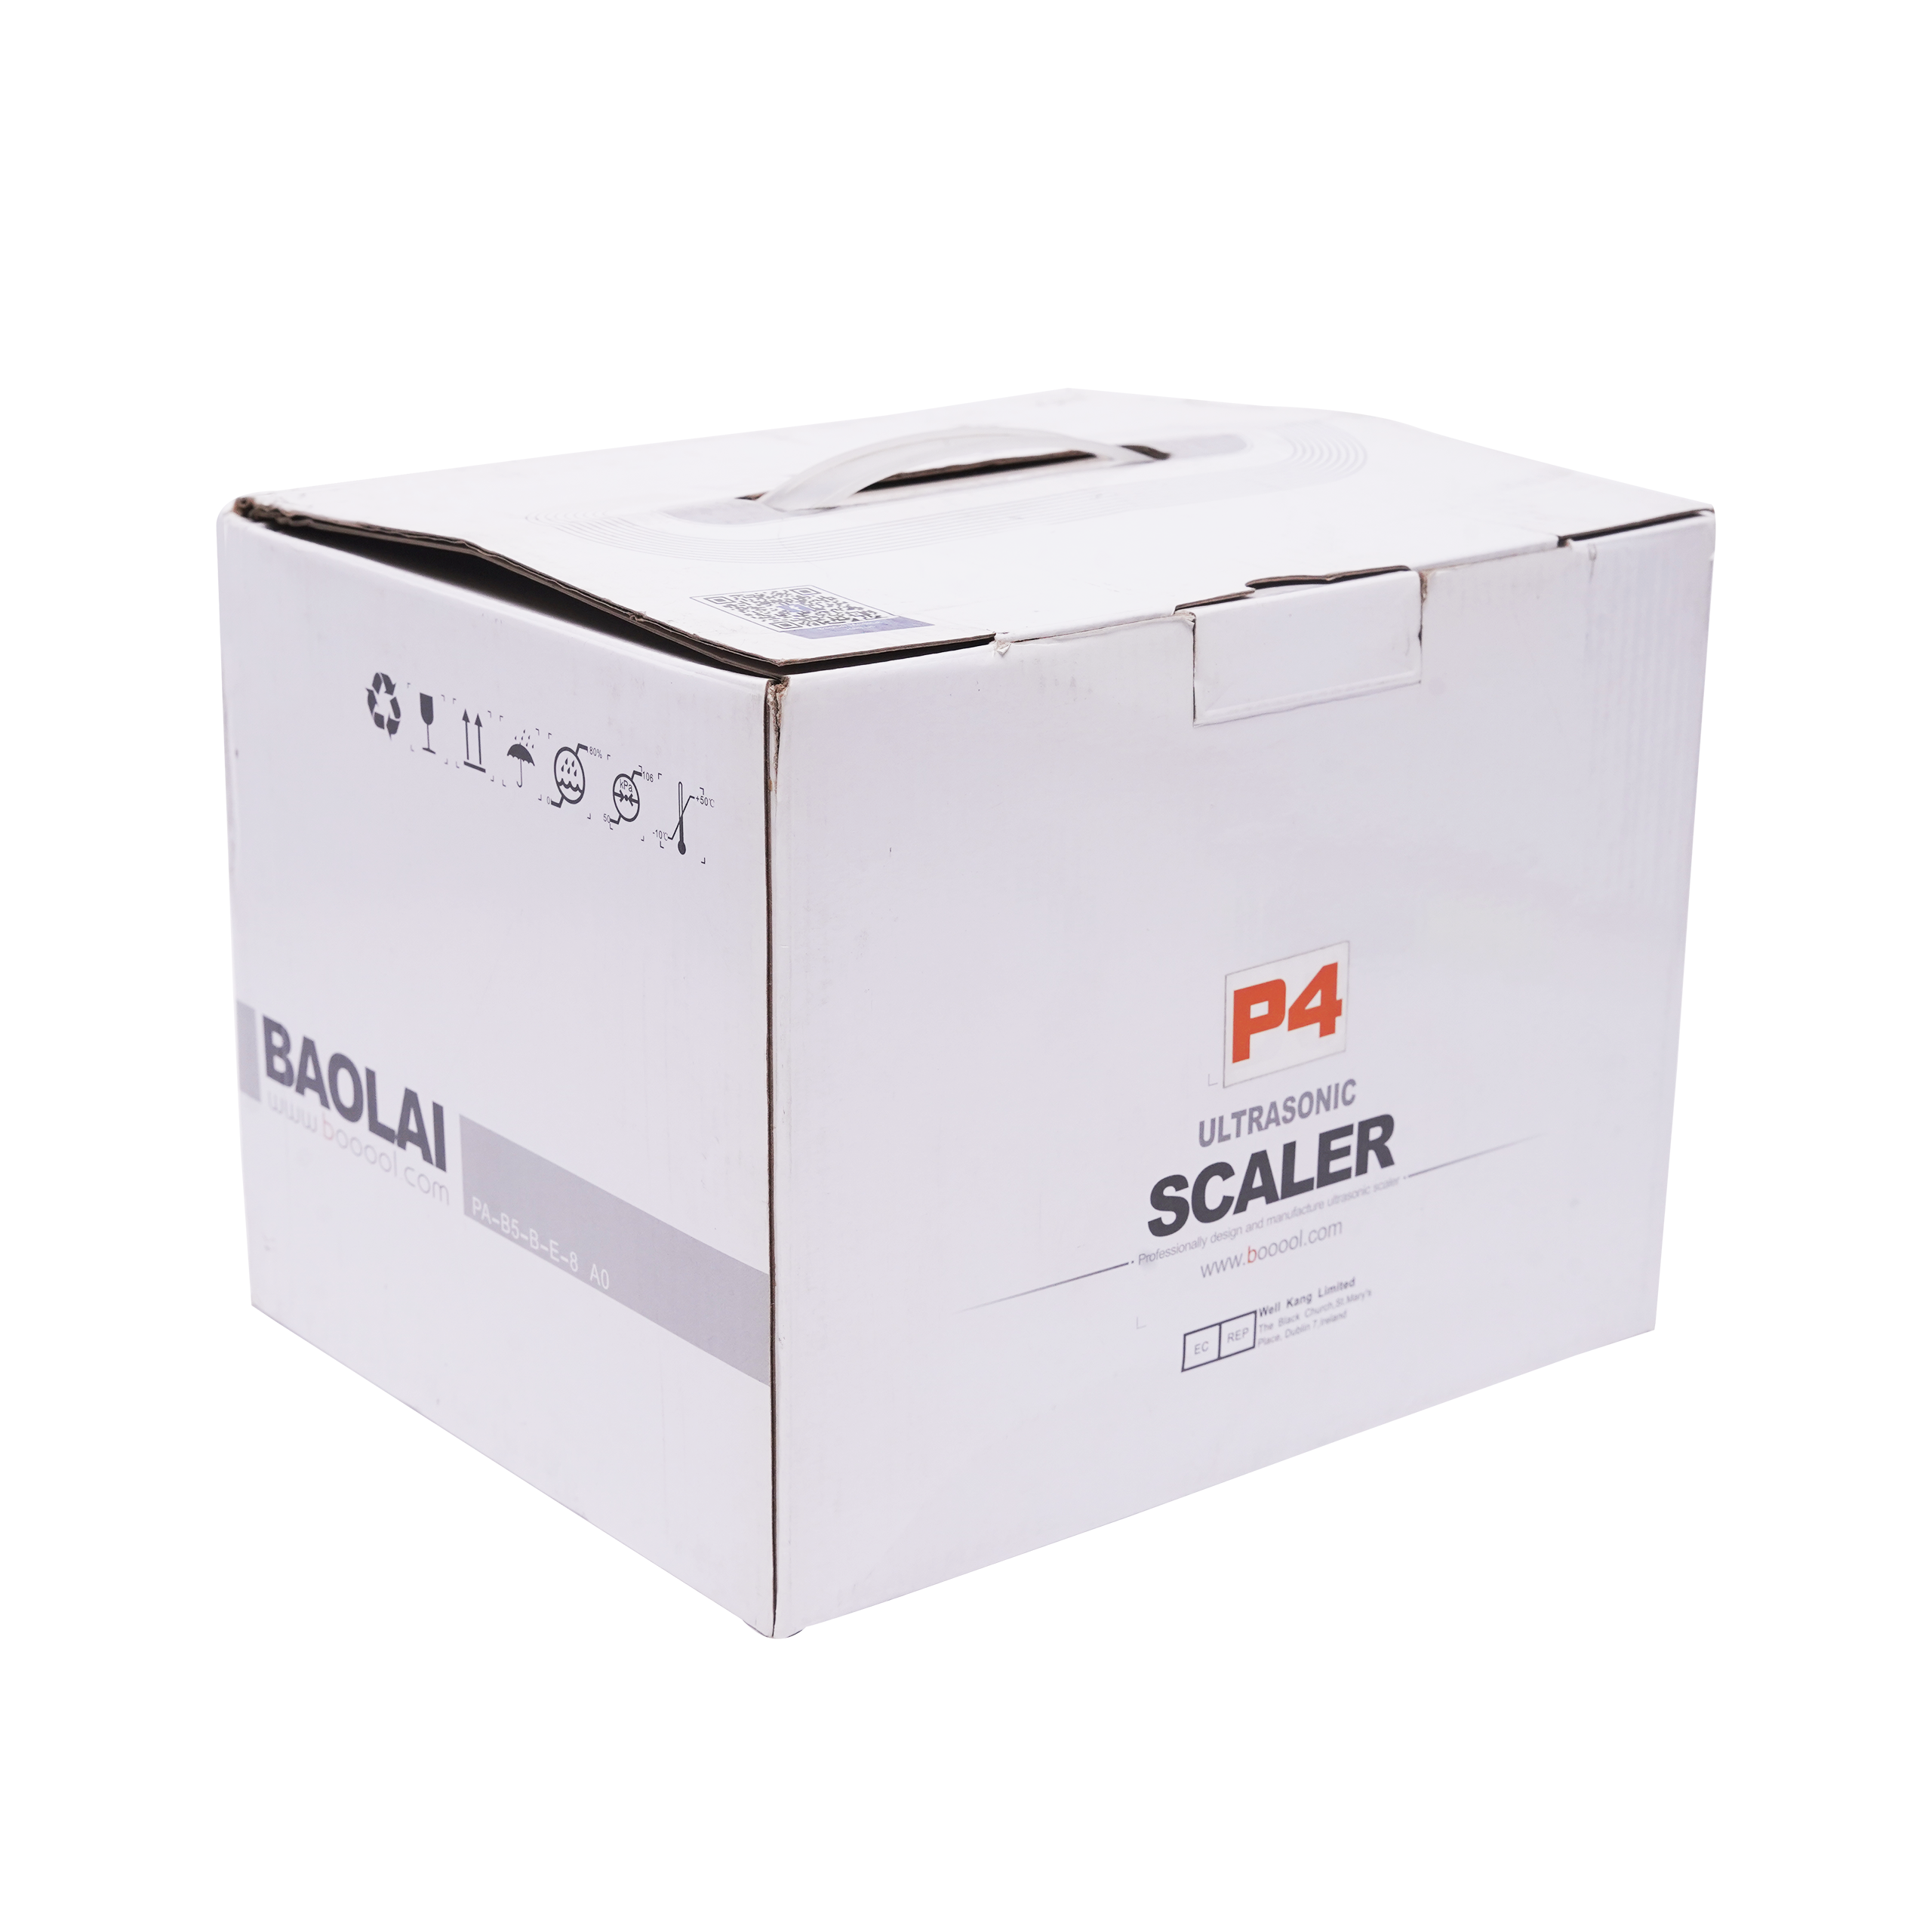 Baolai Ultrasconic Scaler P4